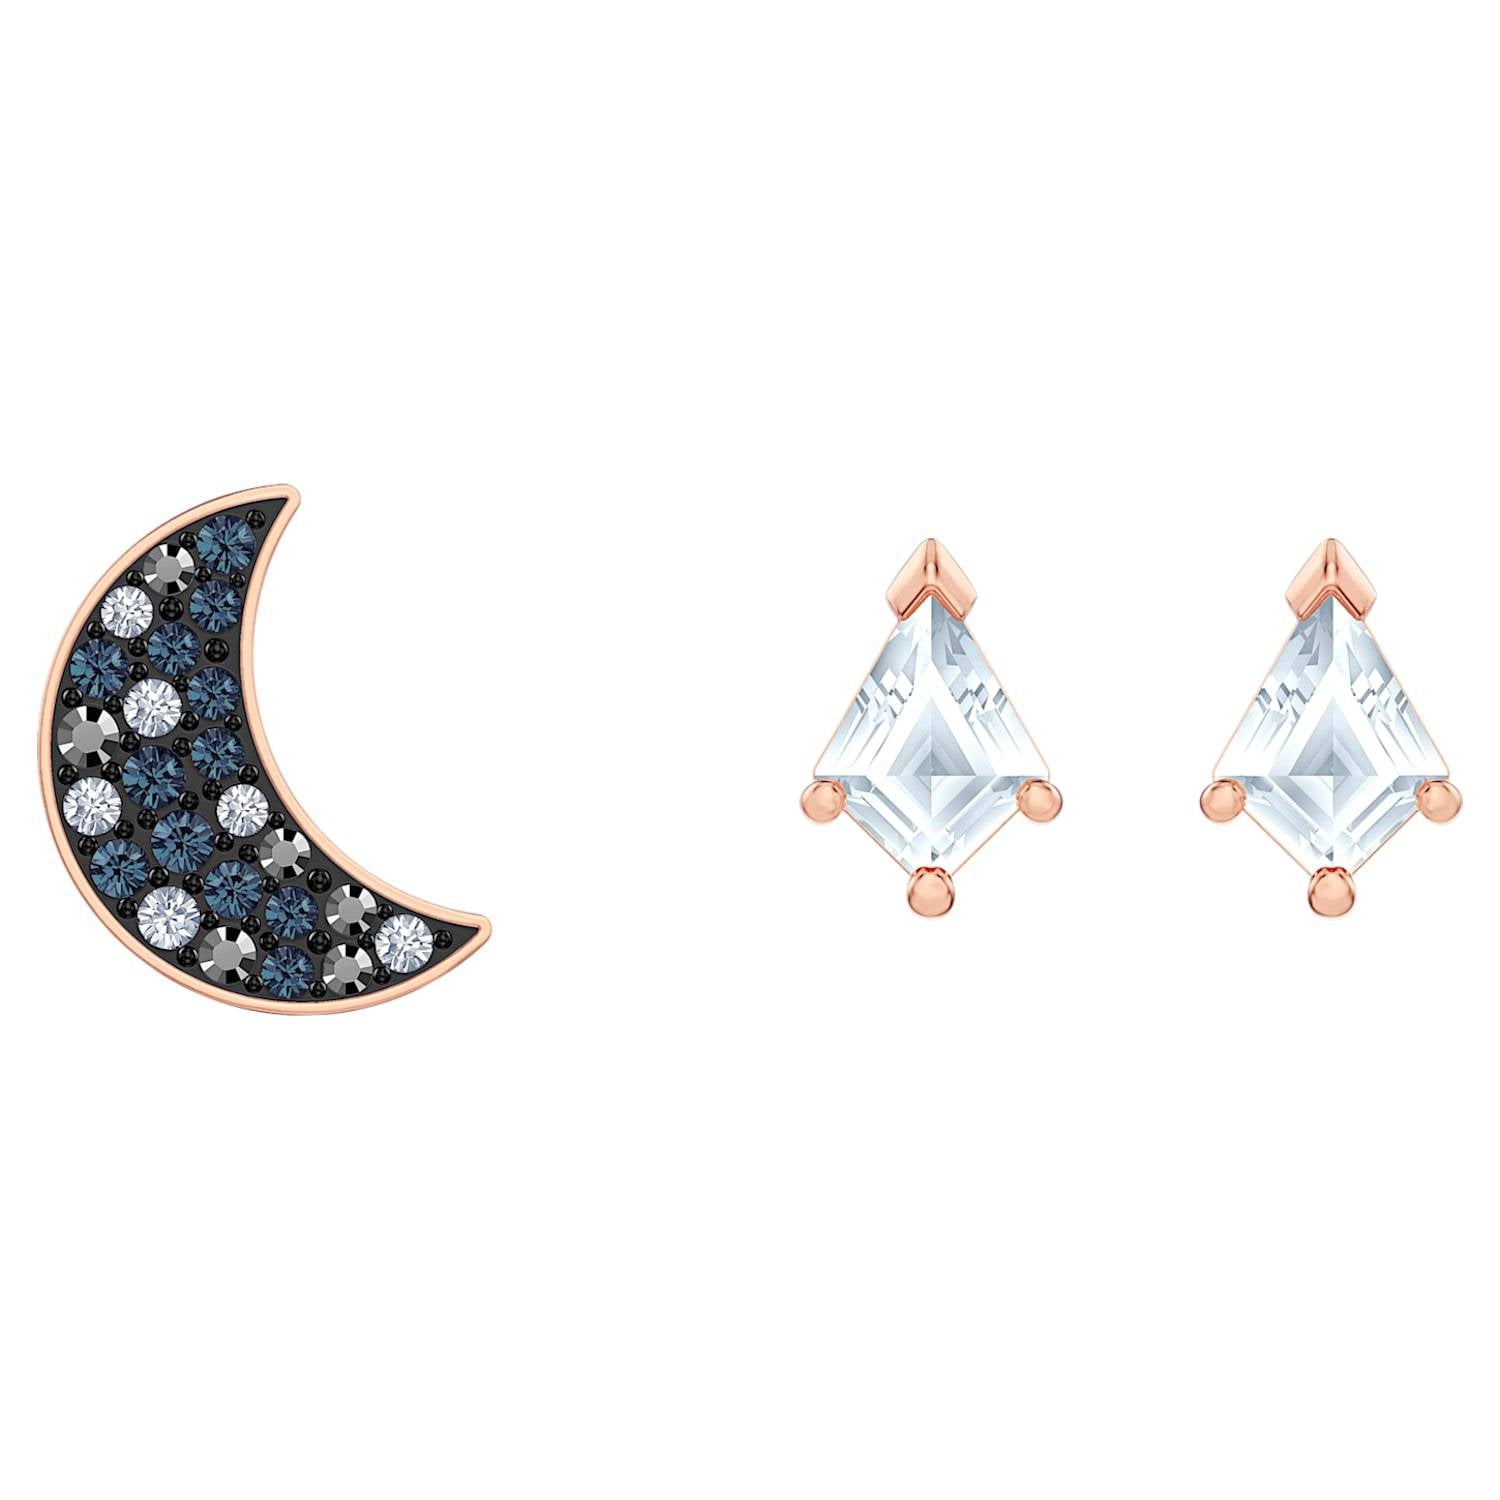 SWAROVSKI Symbolic Pierced Earrings set - Multi-colored & Rose-gold tone plated #5494353